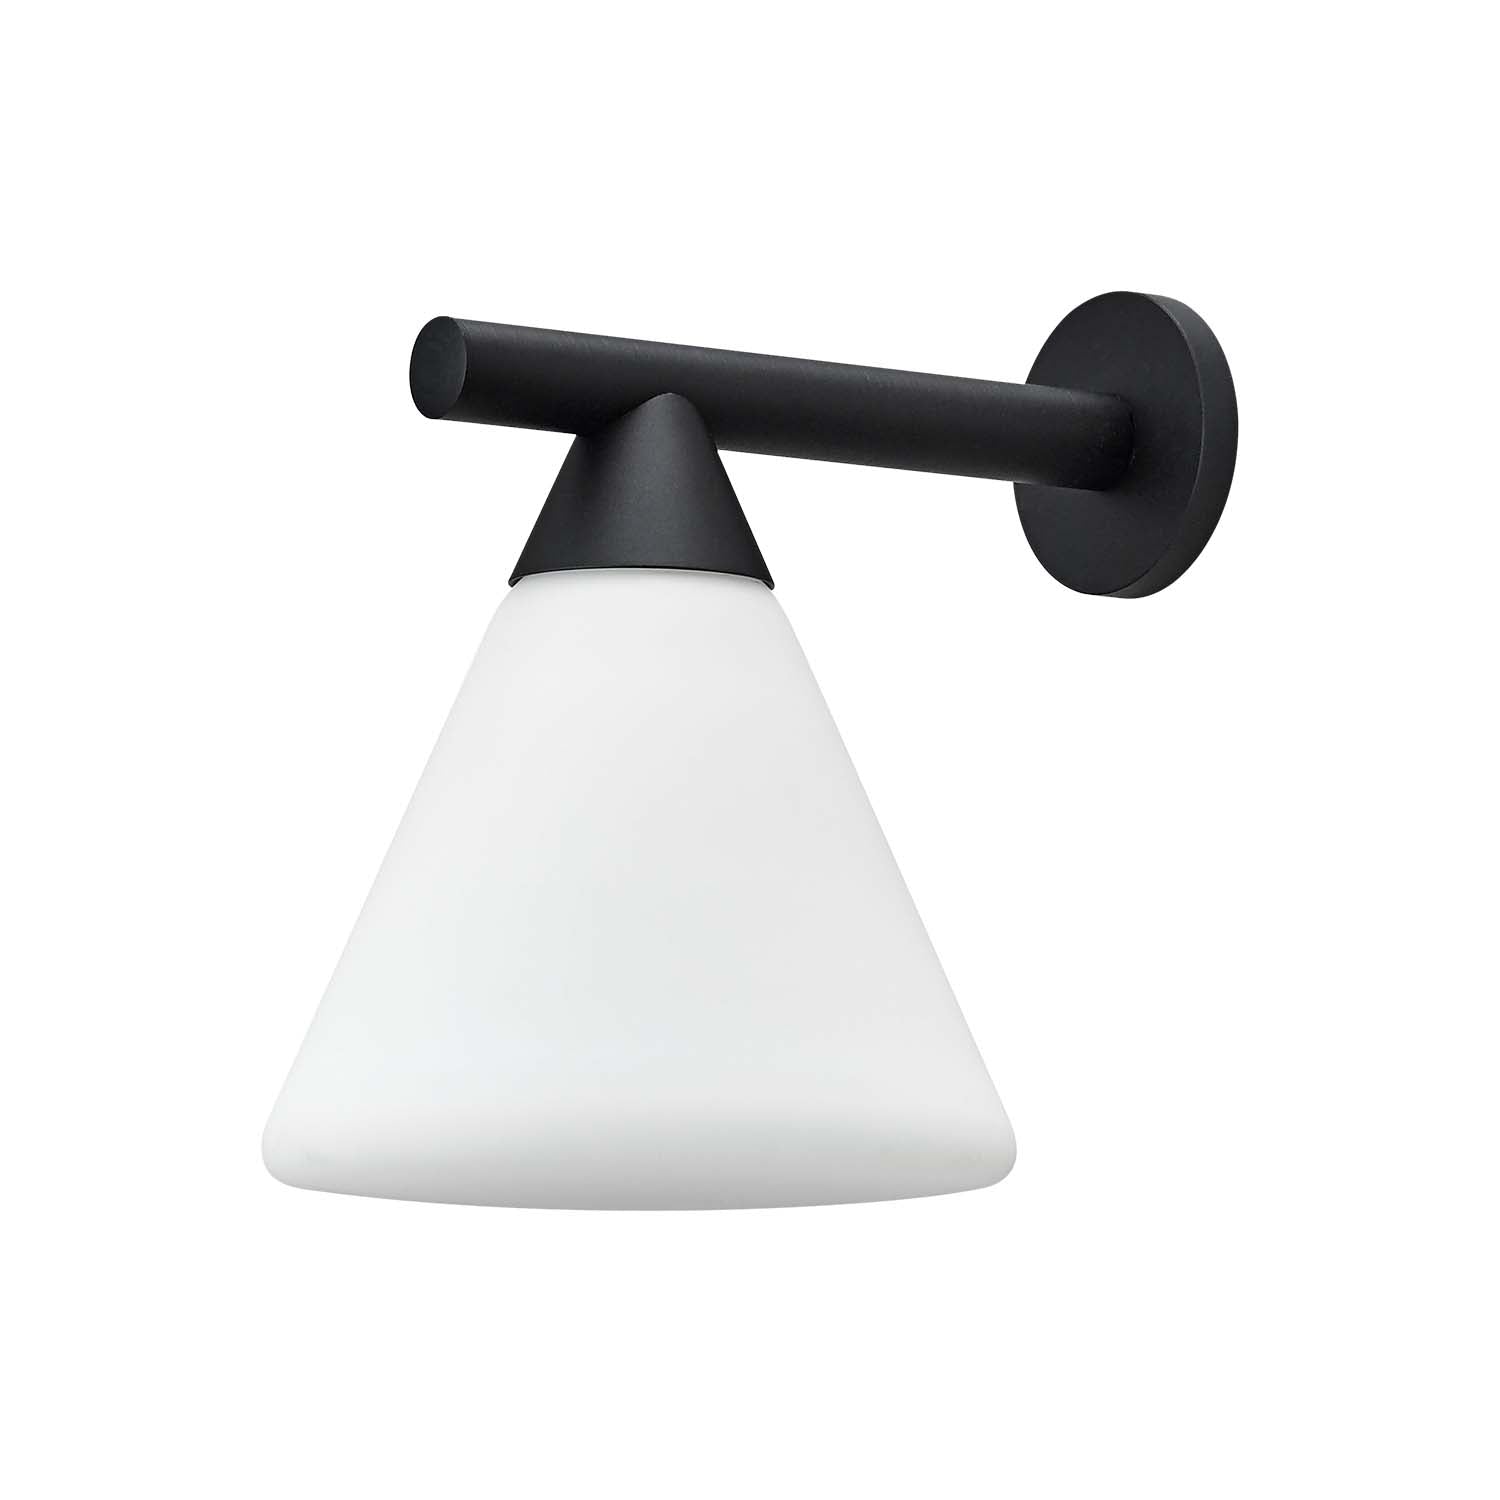 PROBE - White opaque glass cone wall light